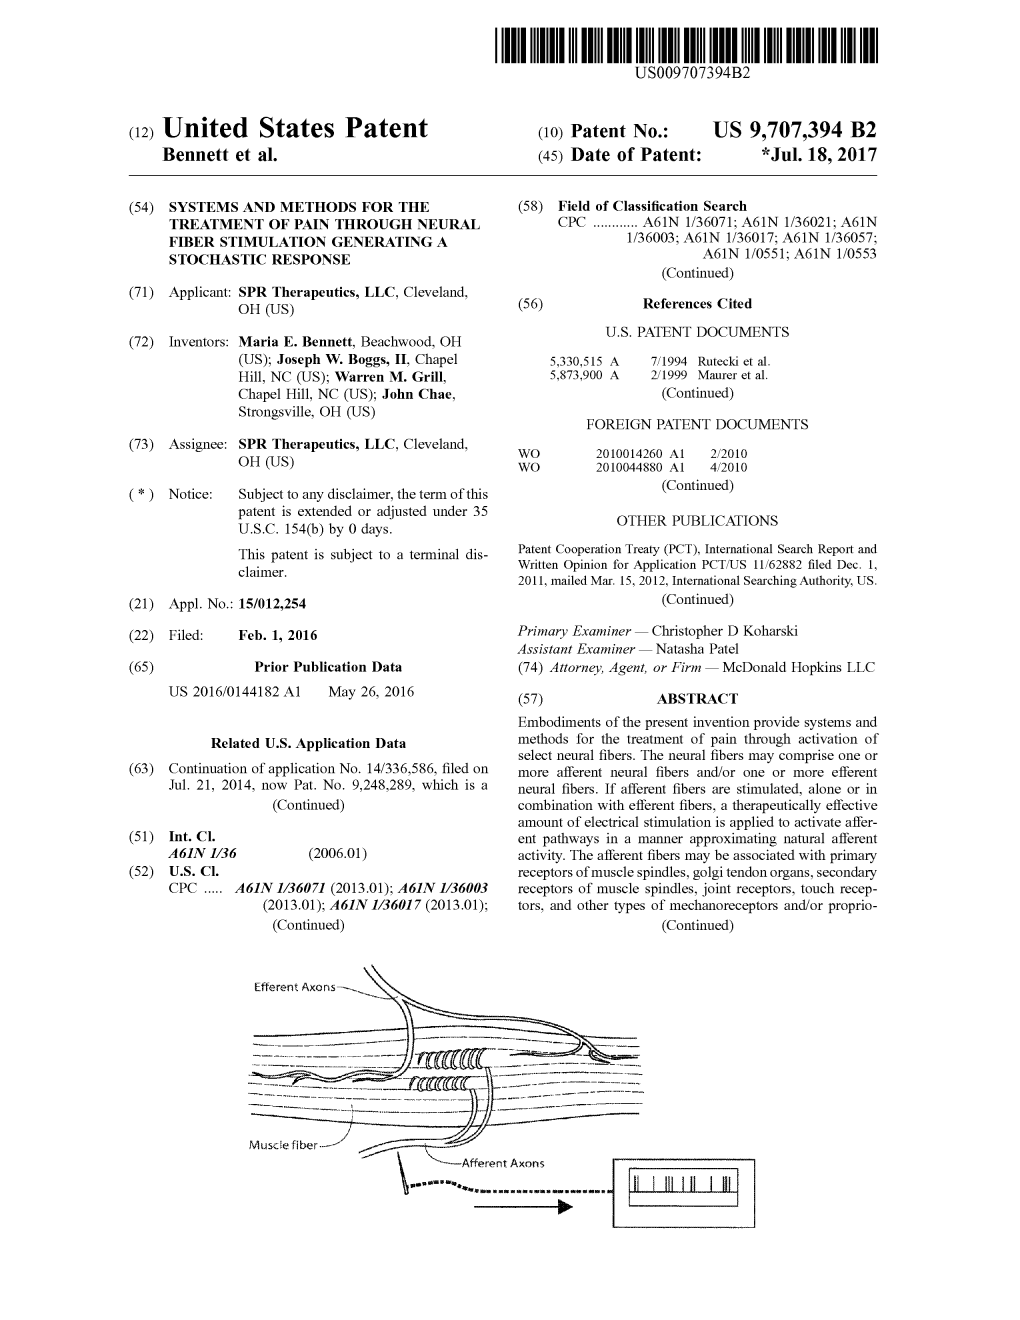 (12) United States Patent (10) Patent No.: US 9,707,394 B2 Bennett Et Al